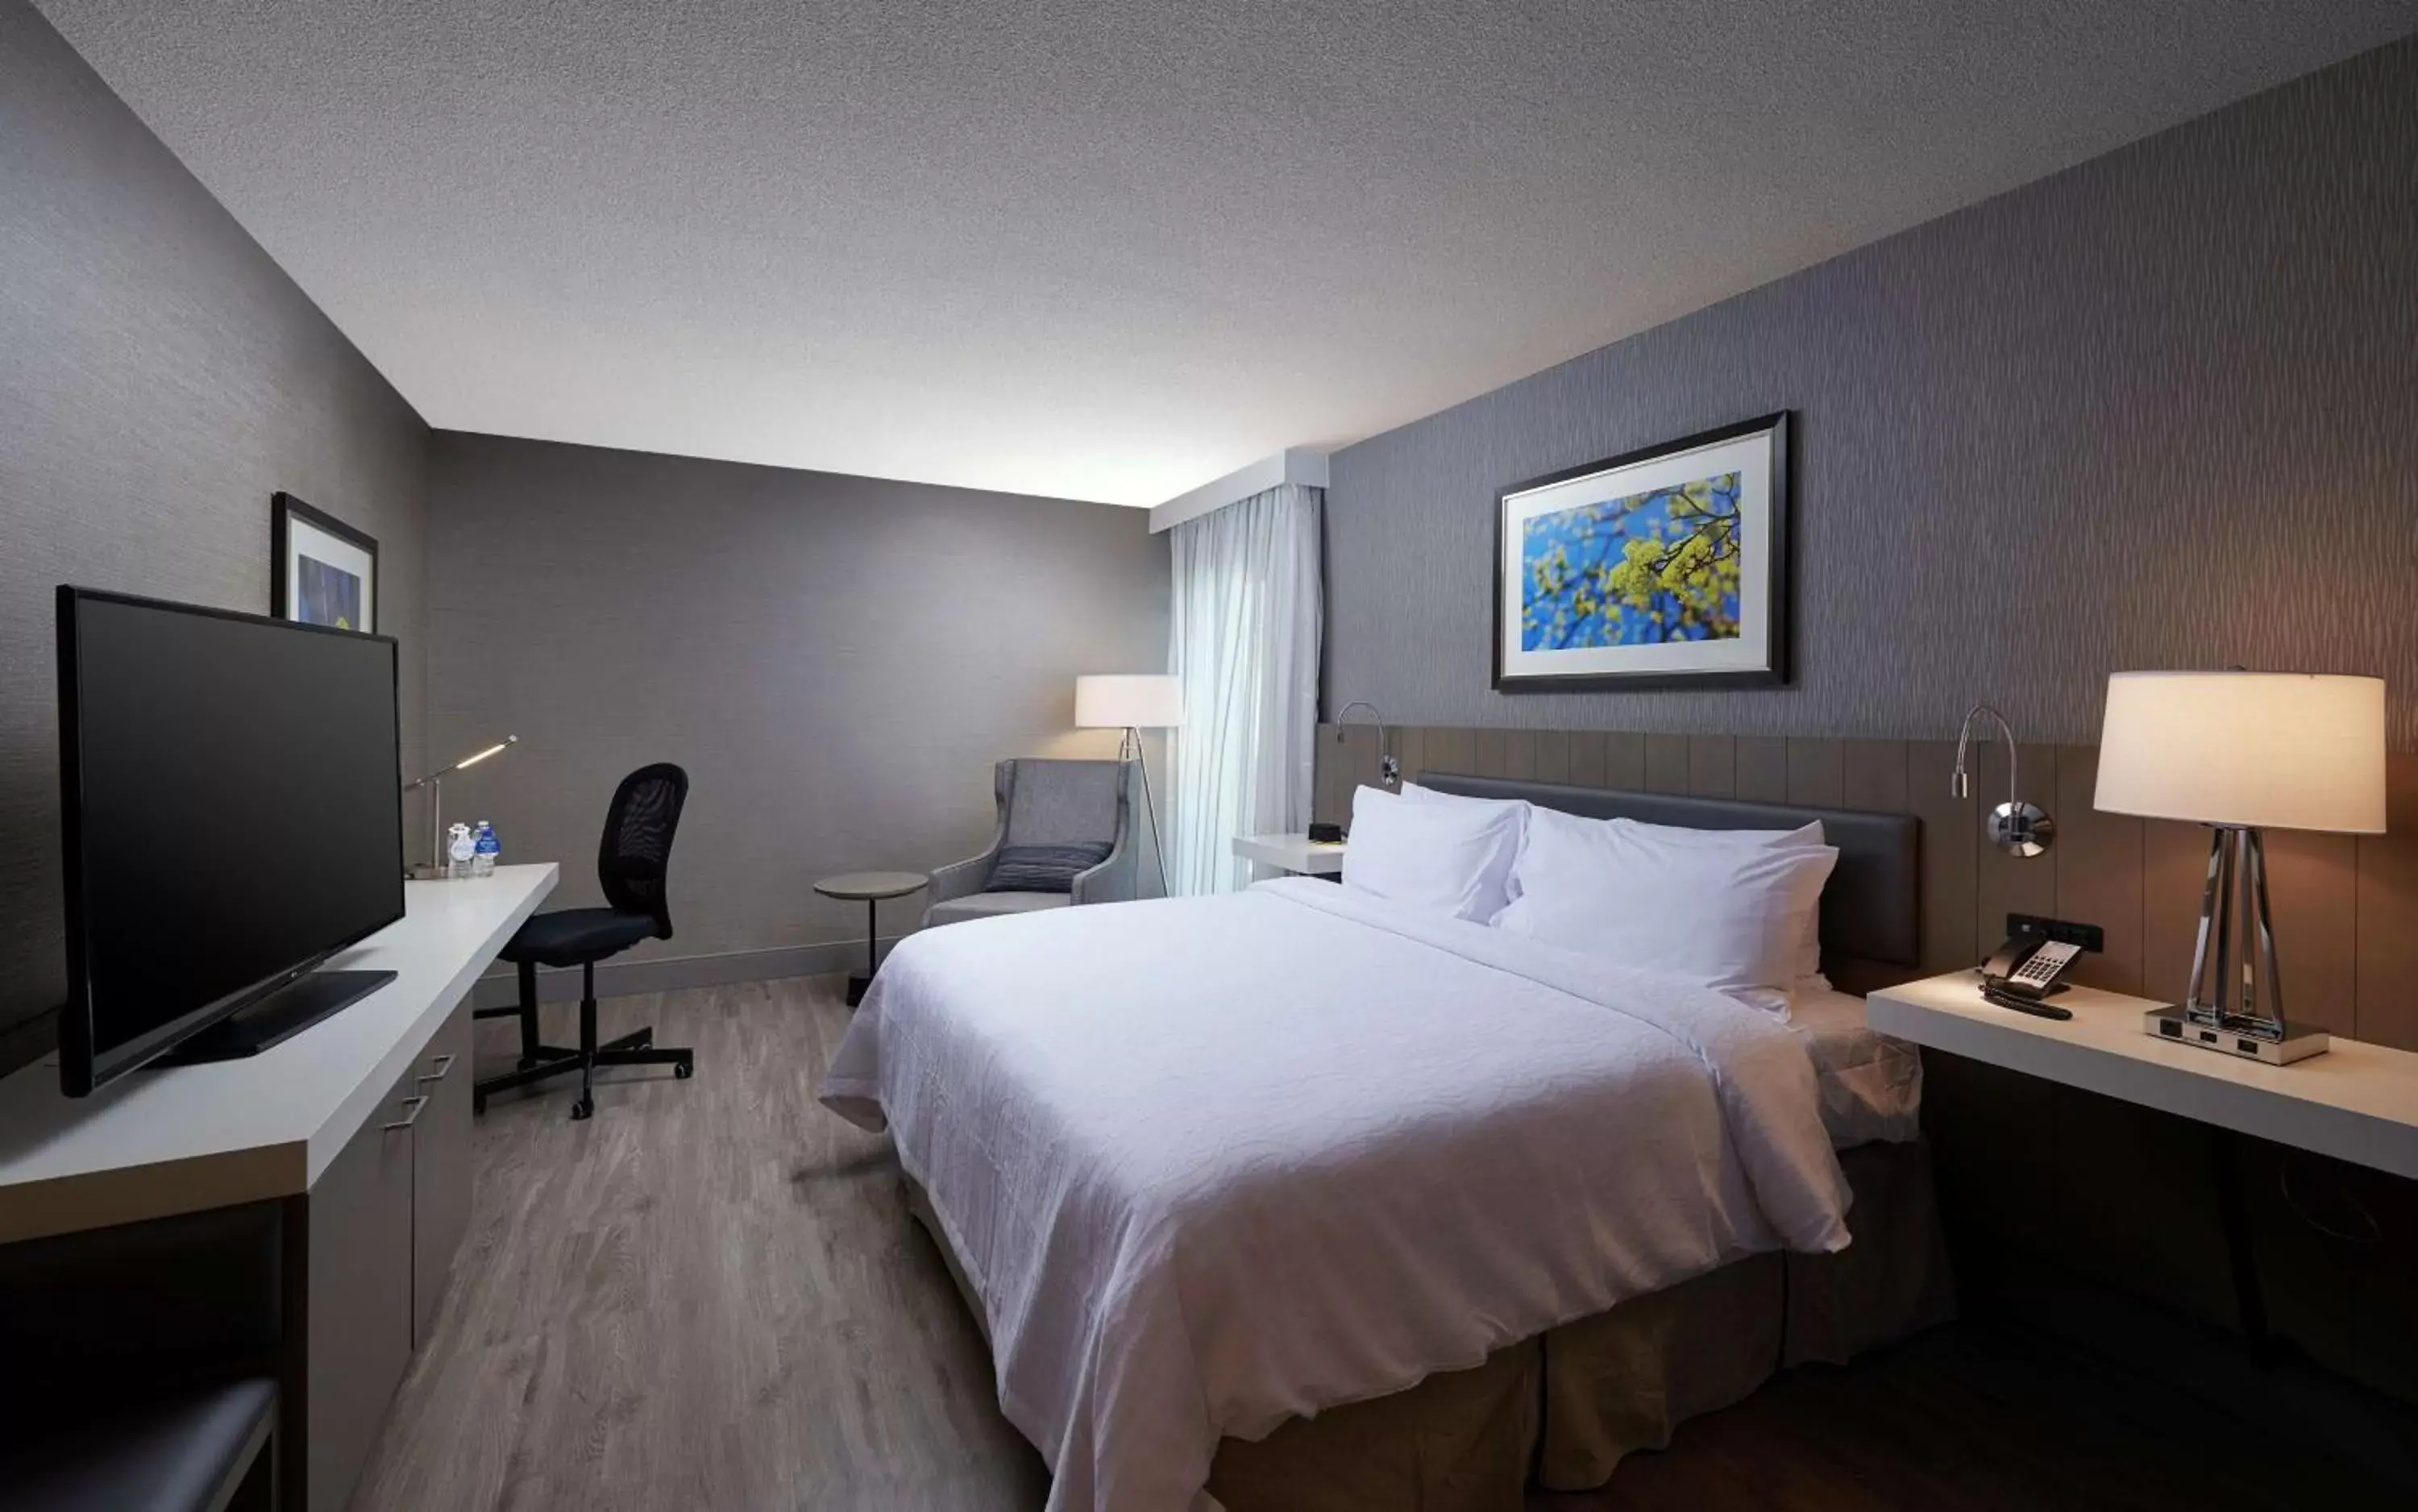 Bedroom in Hilton Garden Inn St. John's Newfoundland, Canada